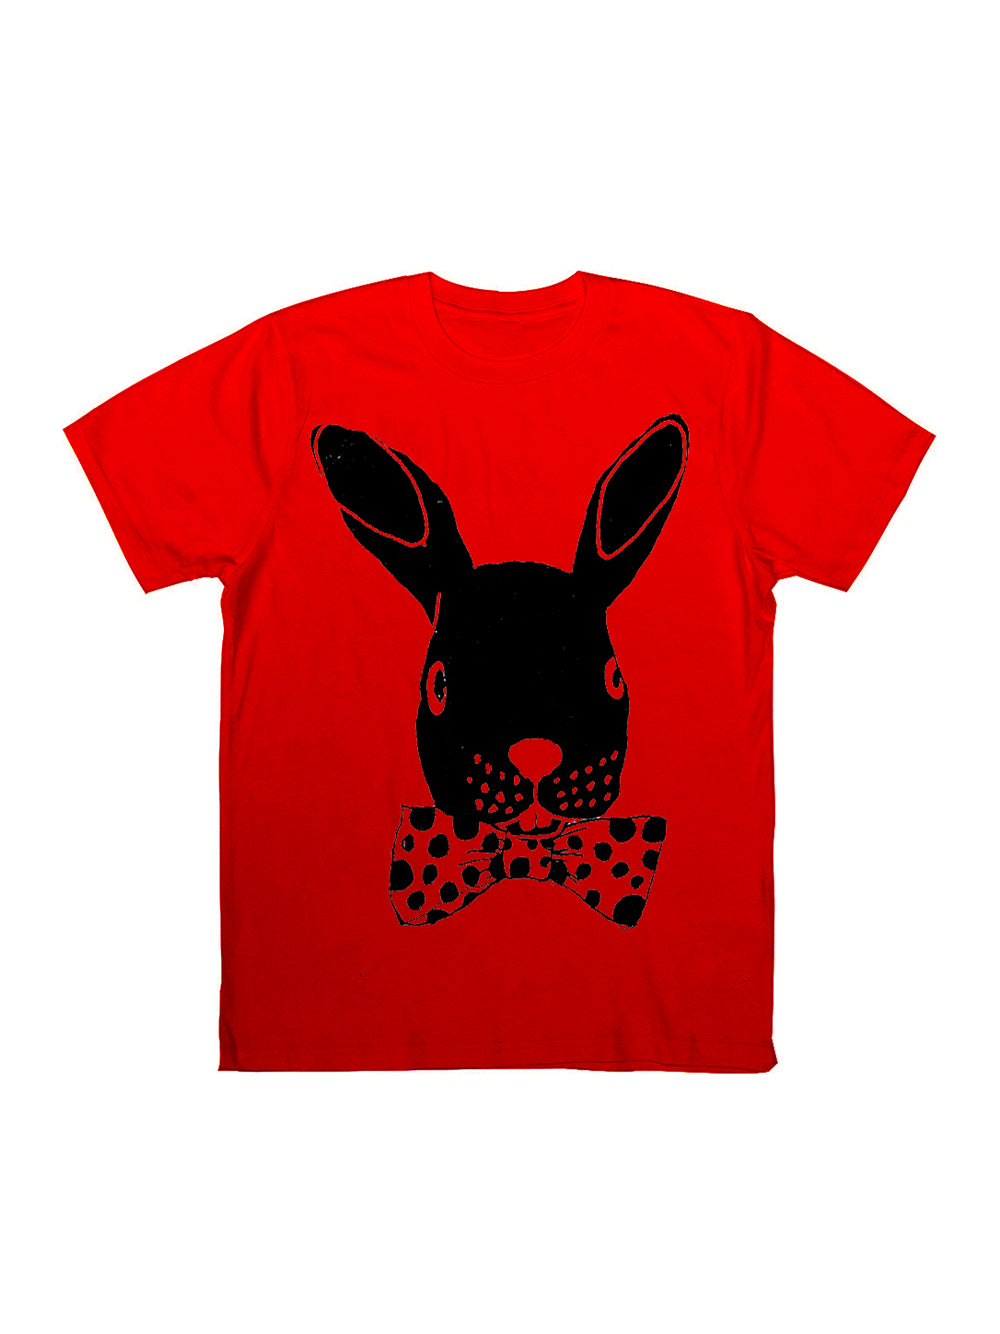 Bad Bunny Black T-shirt Red